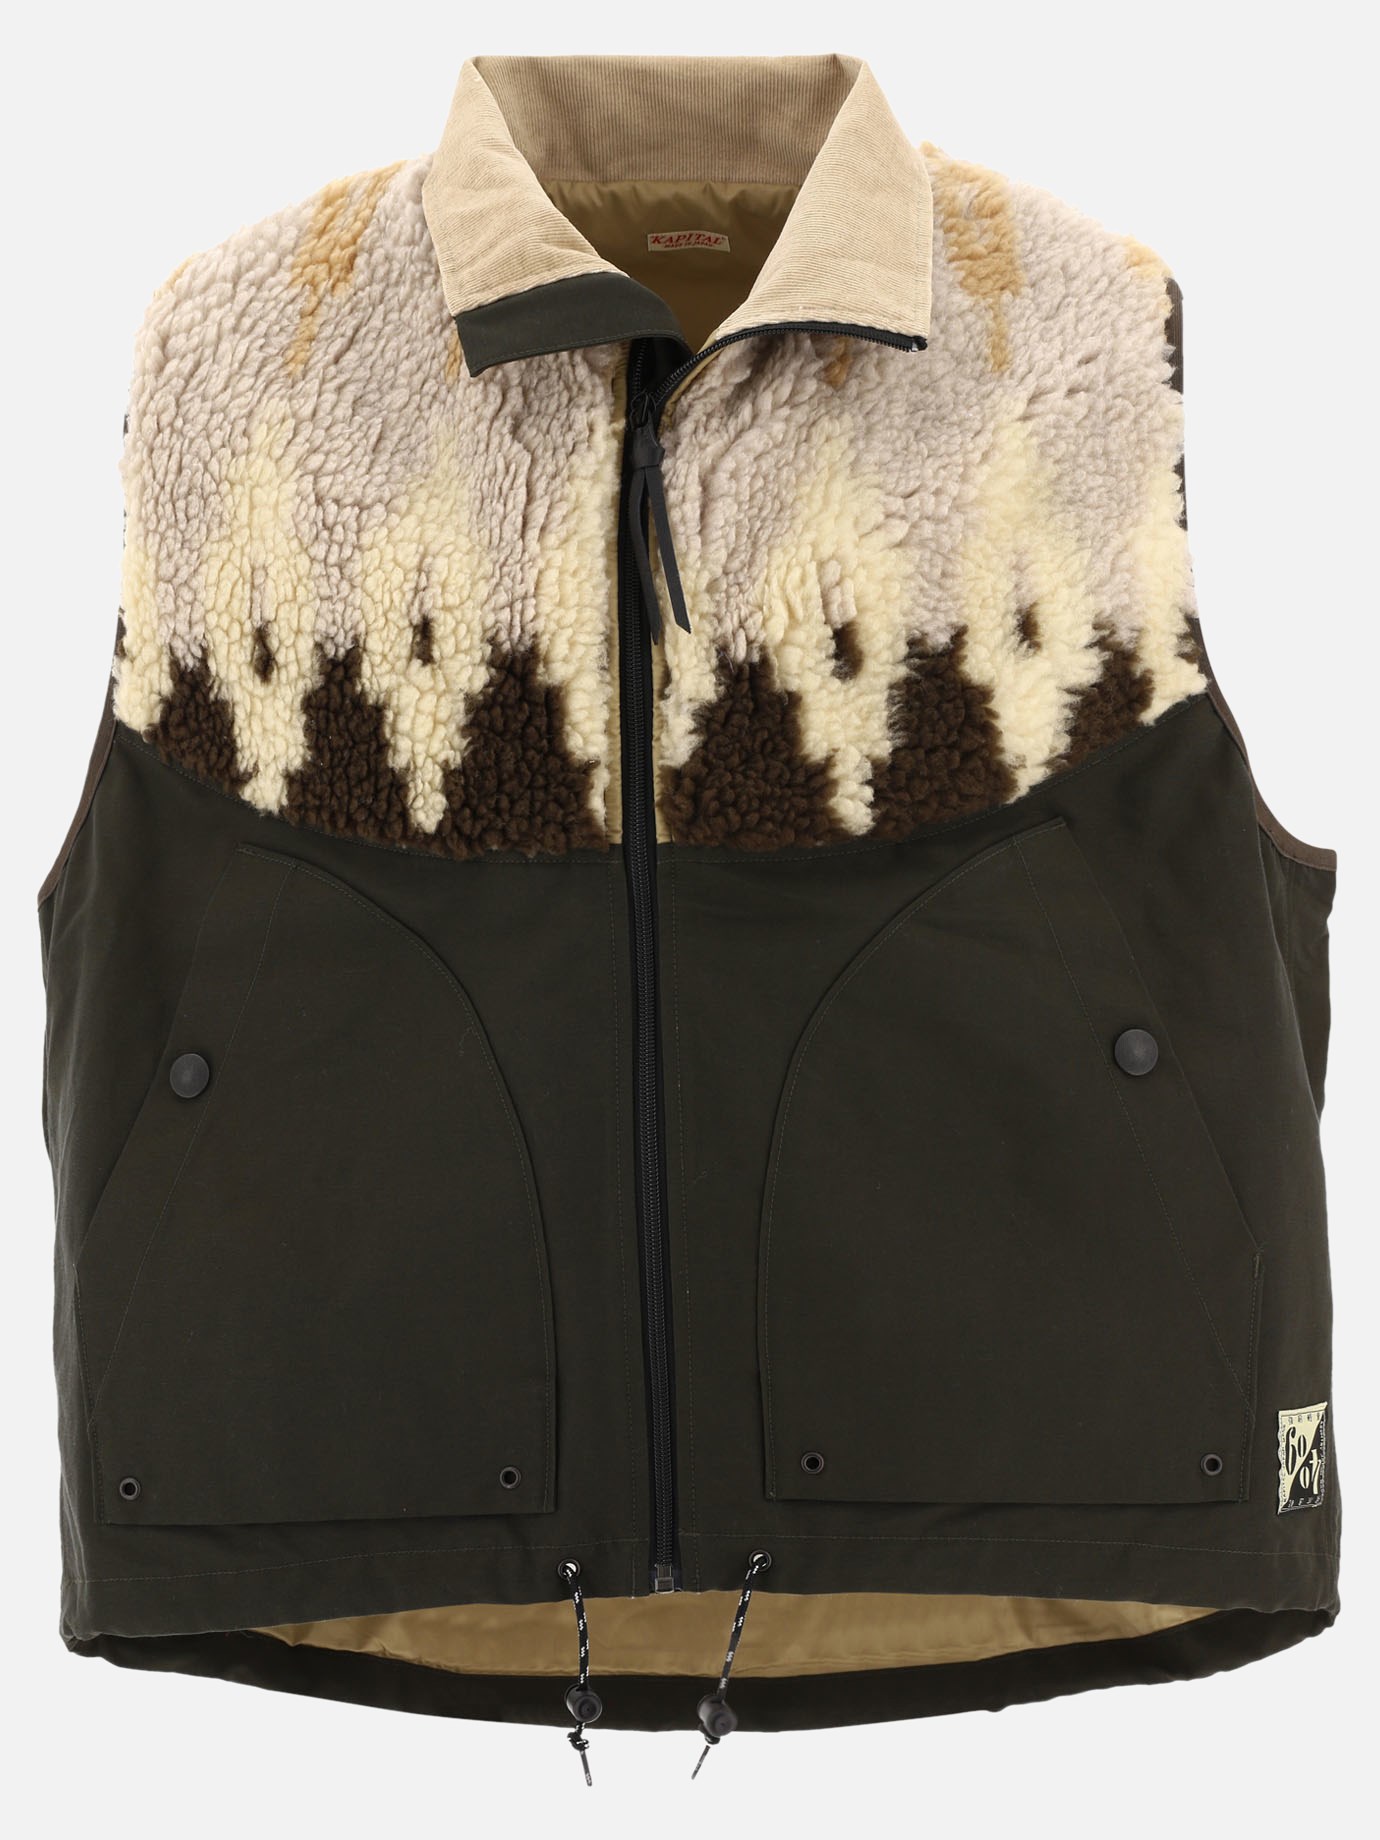 Fleece sleeveless jacket by Kapital